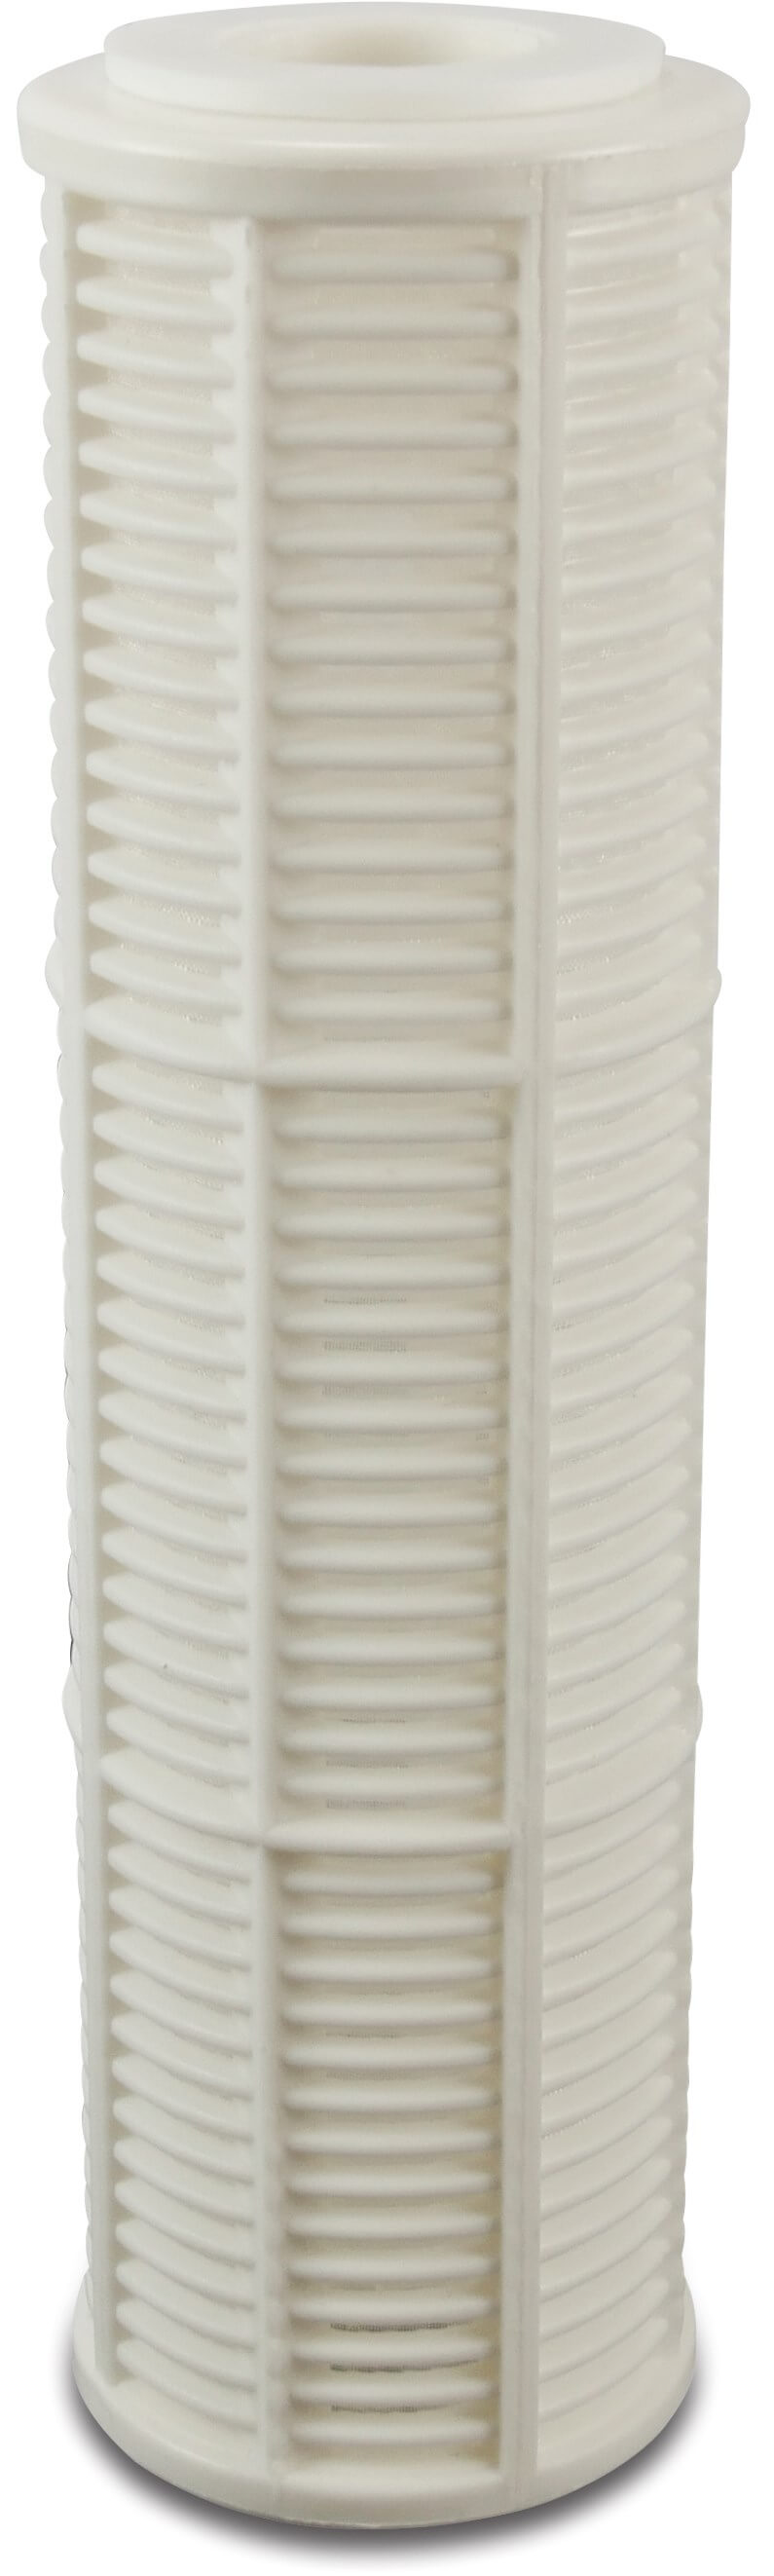 Binnenfilter nylon 60micron polyester gaas type 10" filter